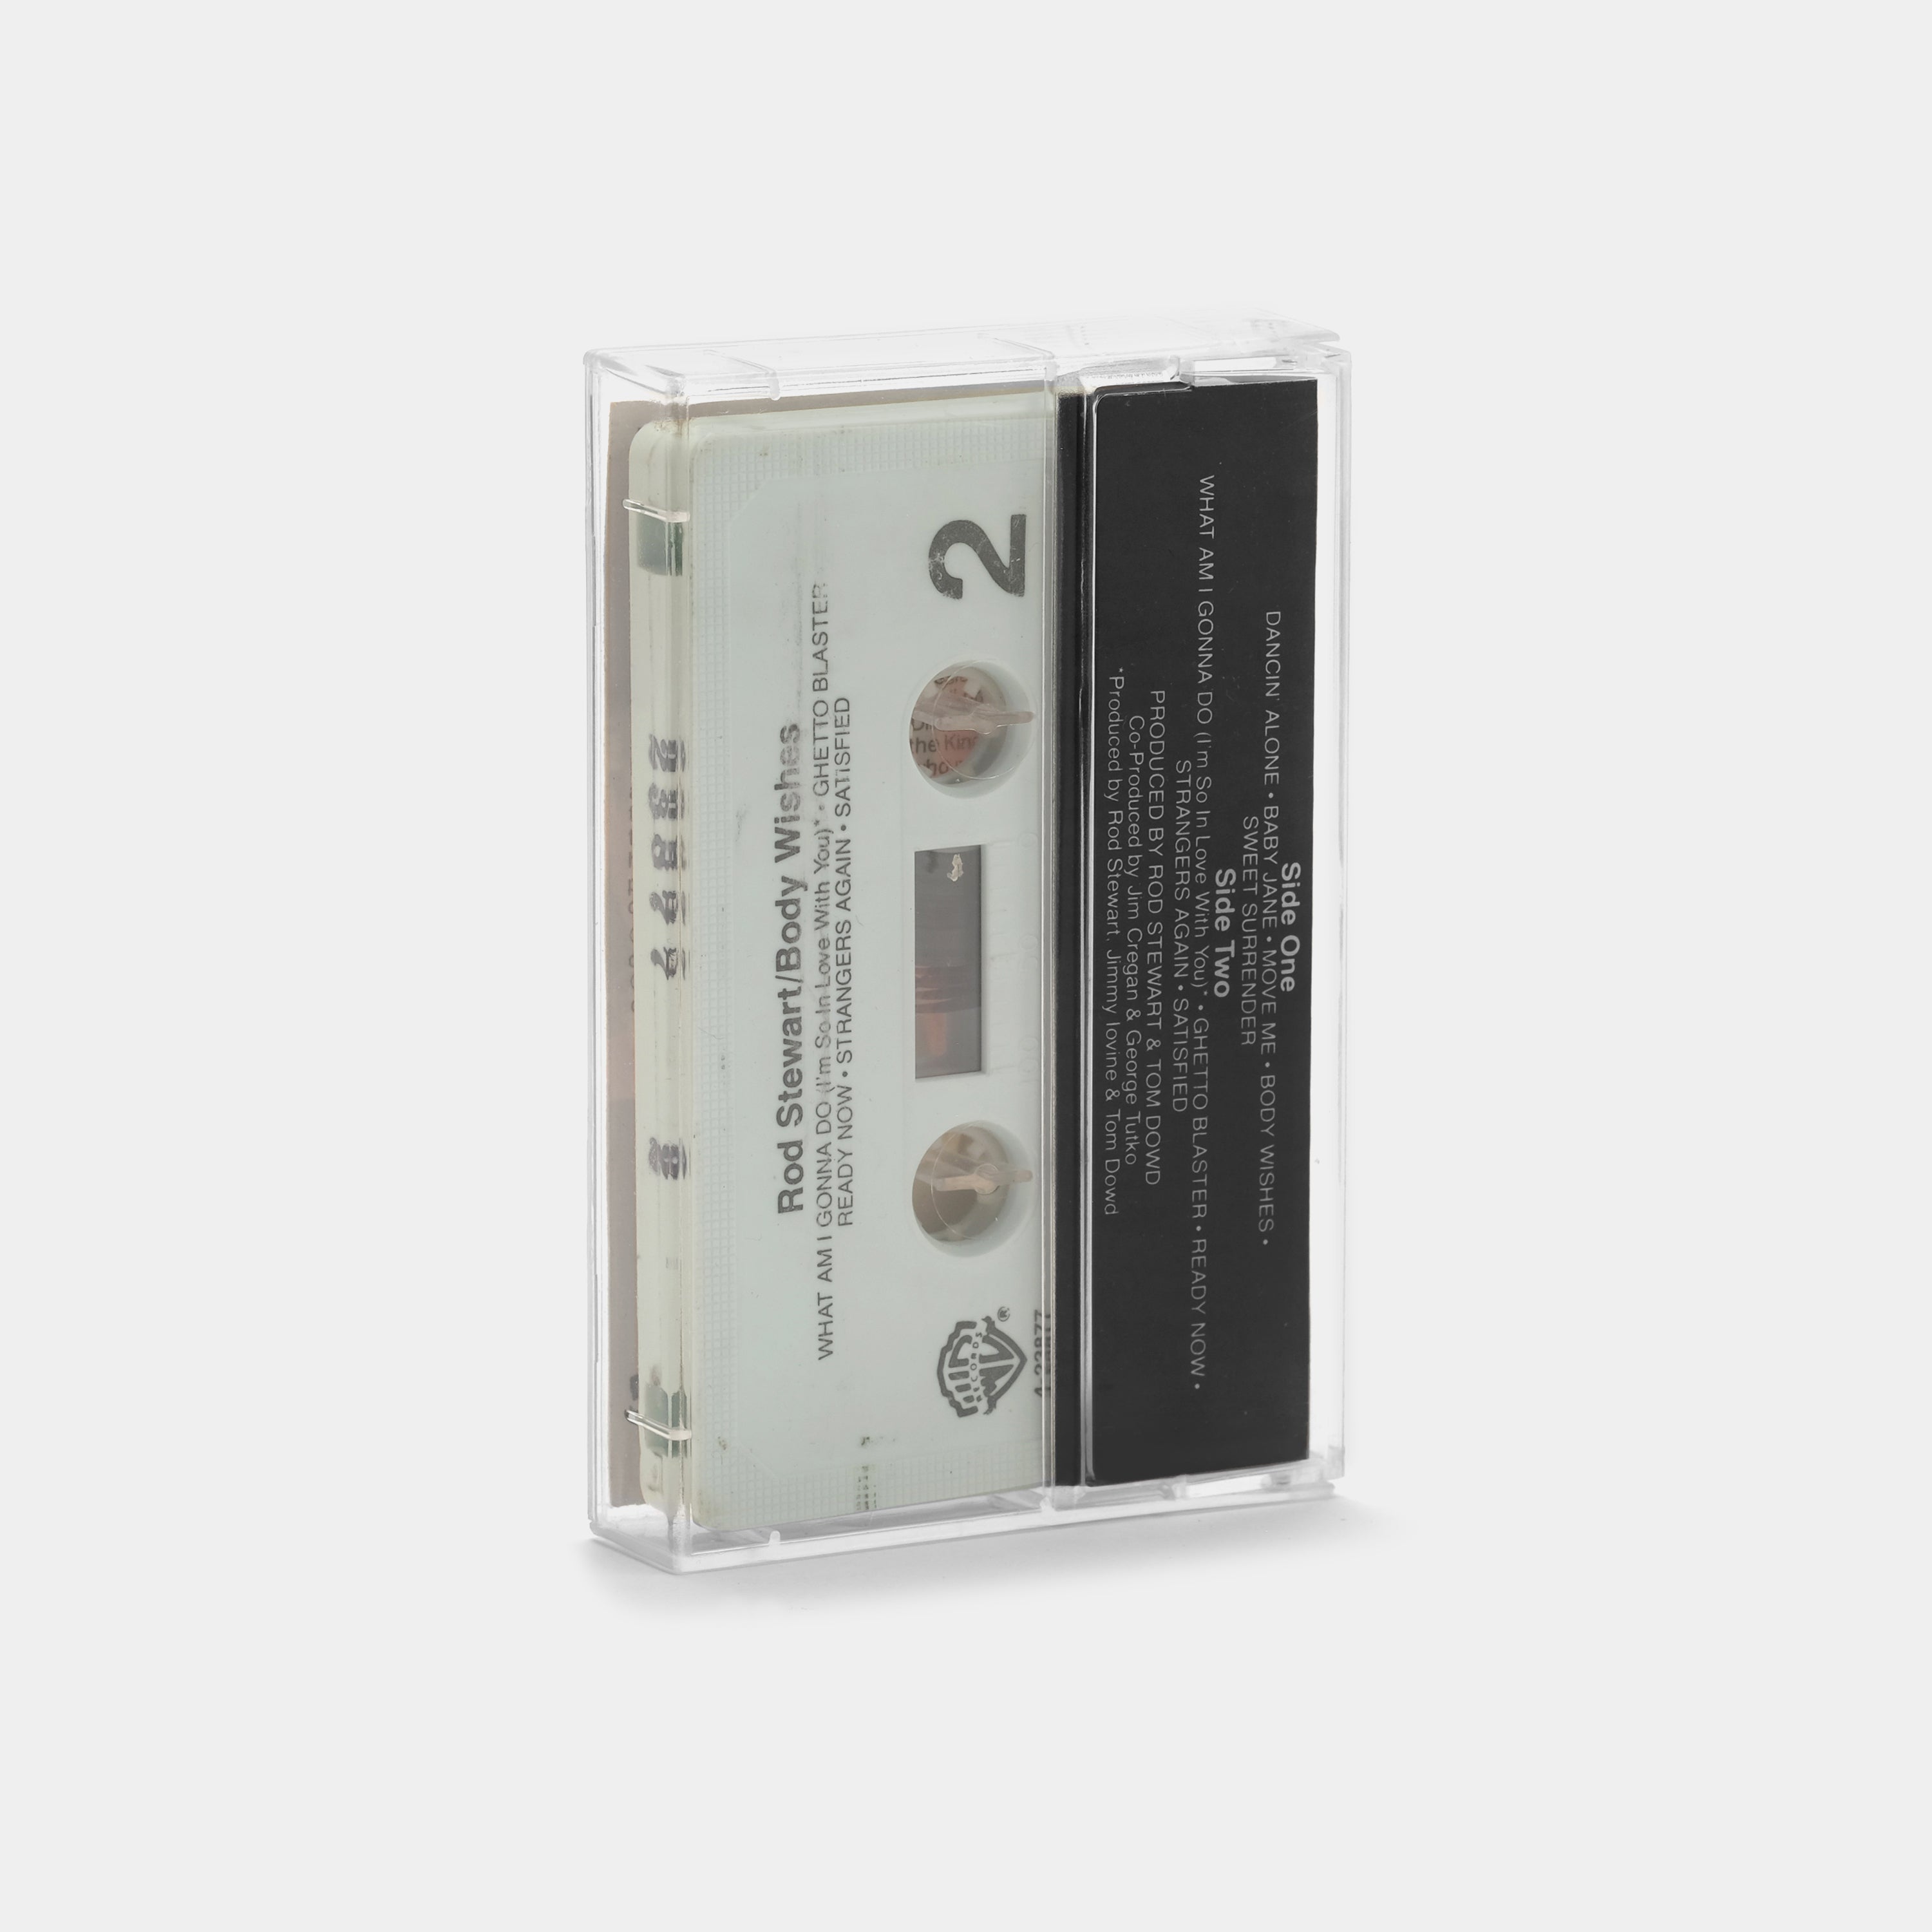 Rod Stewart - Body Wishes Cassette Tape